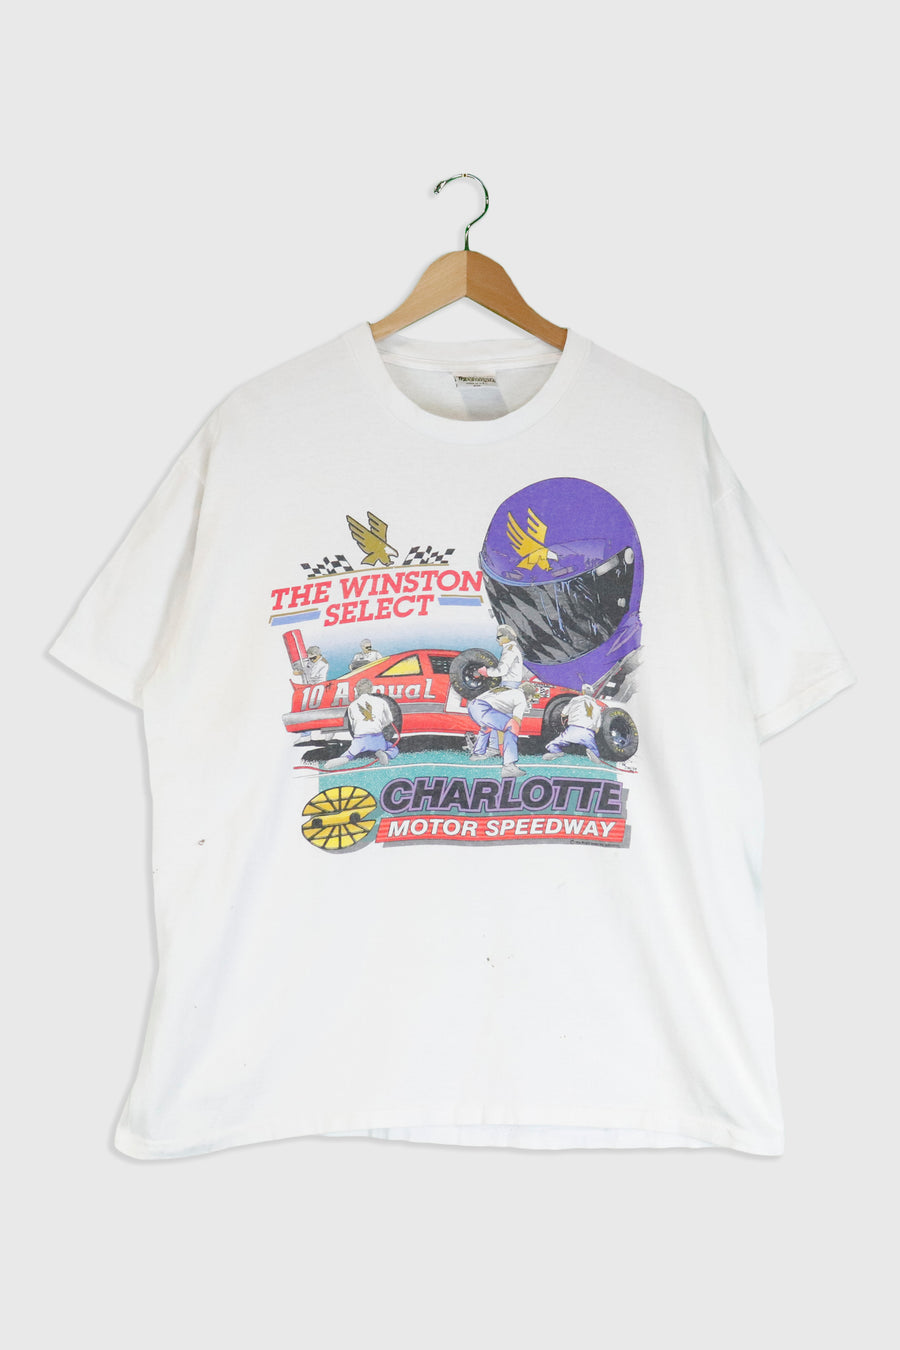 Vintage 1994 The Winston Select Charlotte Motor Speedway T Shirt Sz 2XL